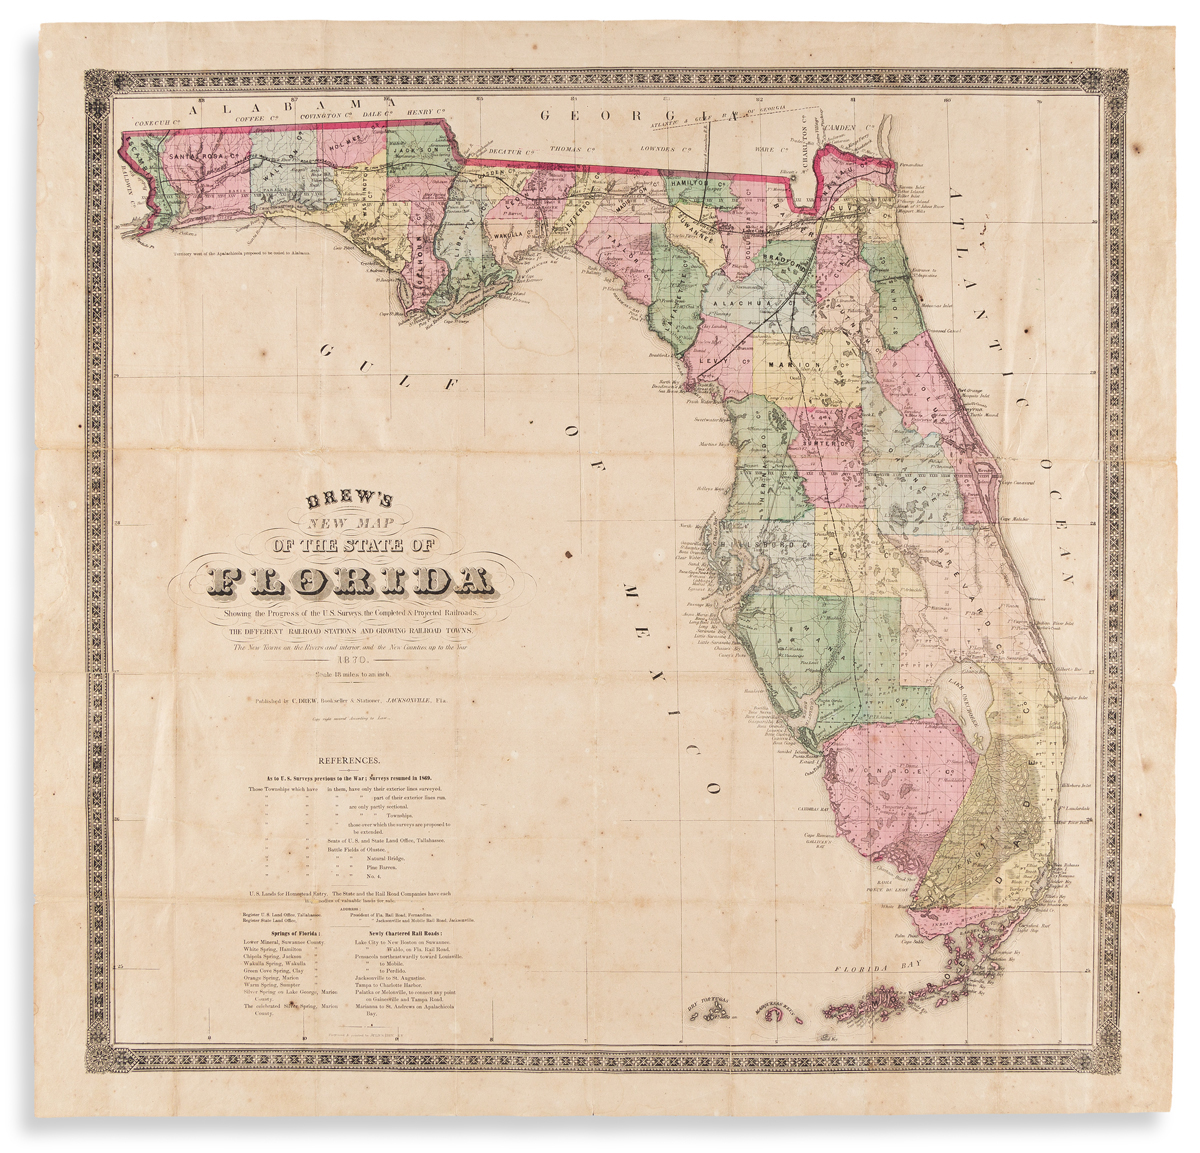 (FLORIDA.) Columbus Drew. Drews New Map of the State of Florida.